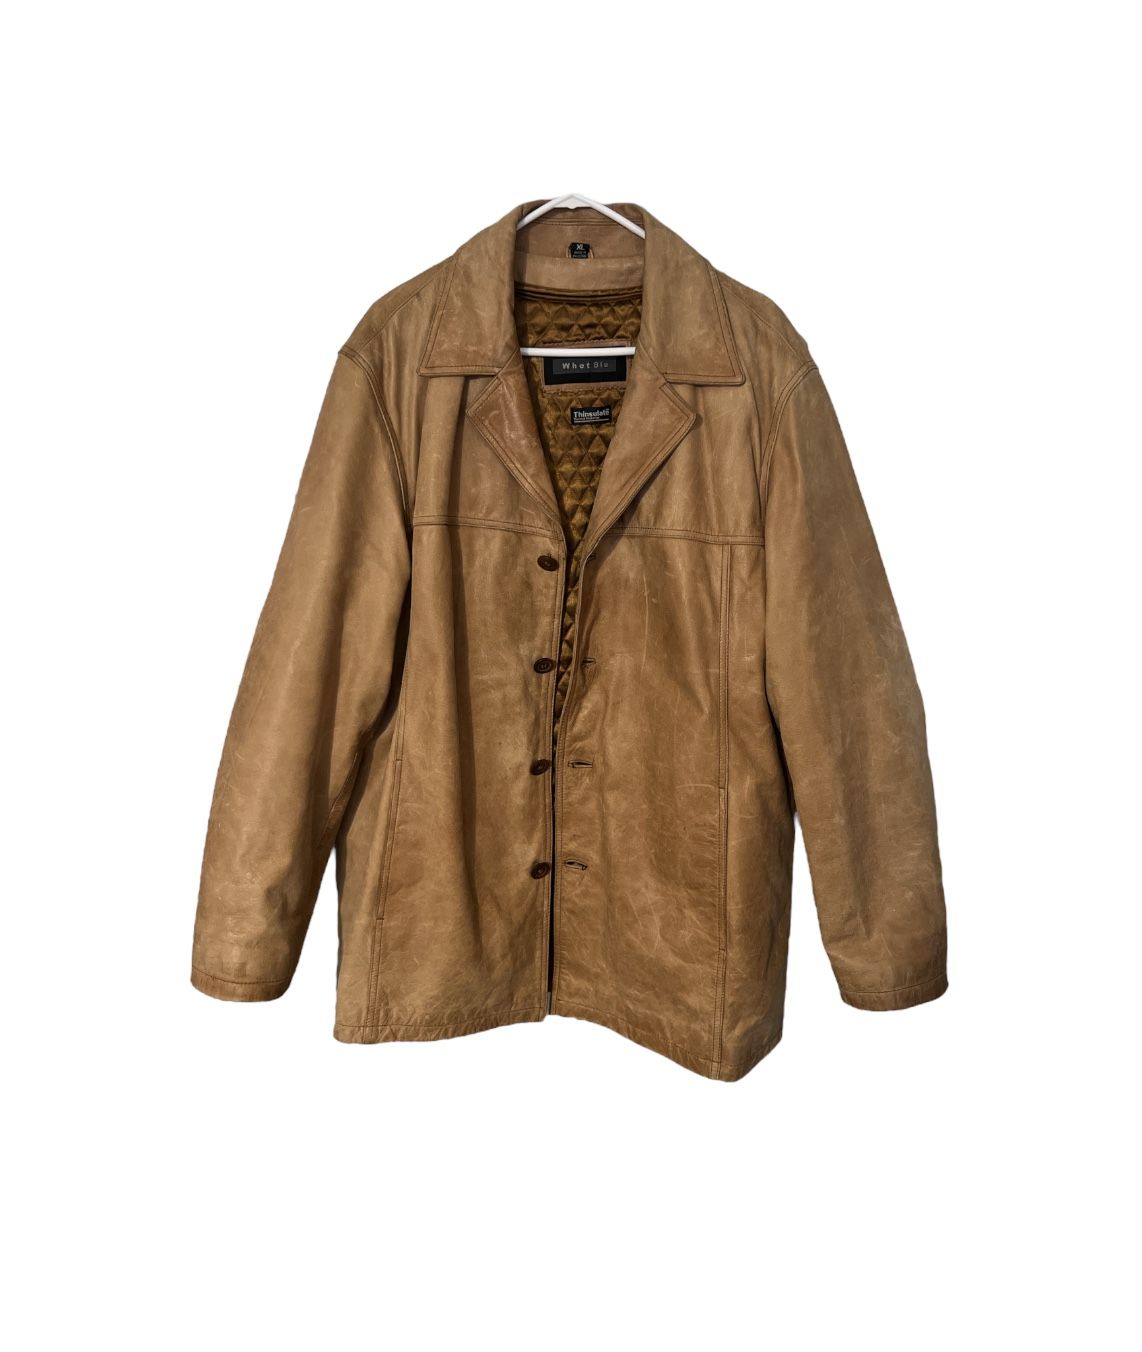 Genuine Leather Jacket Whet Blu Thinsulate 3M Size XL